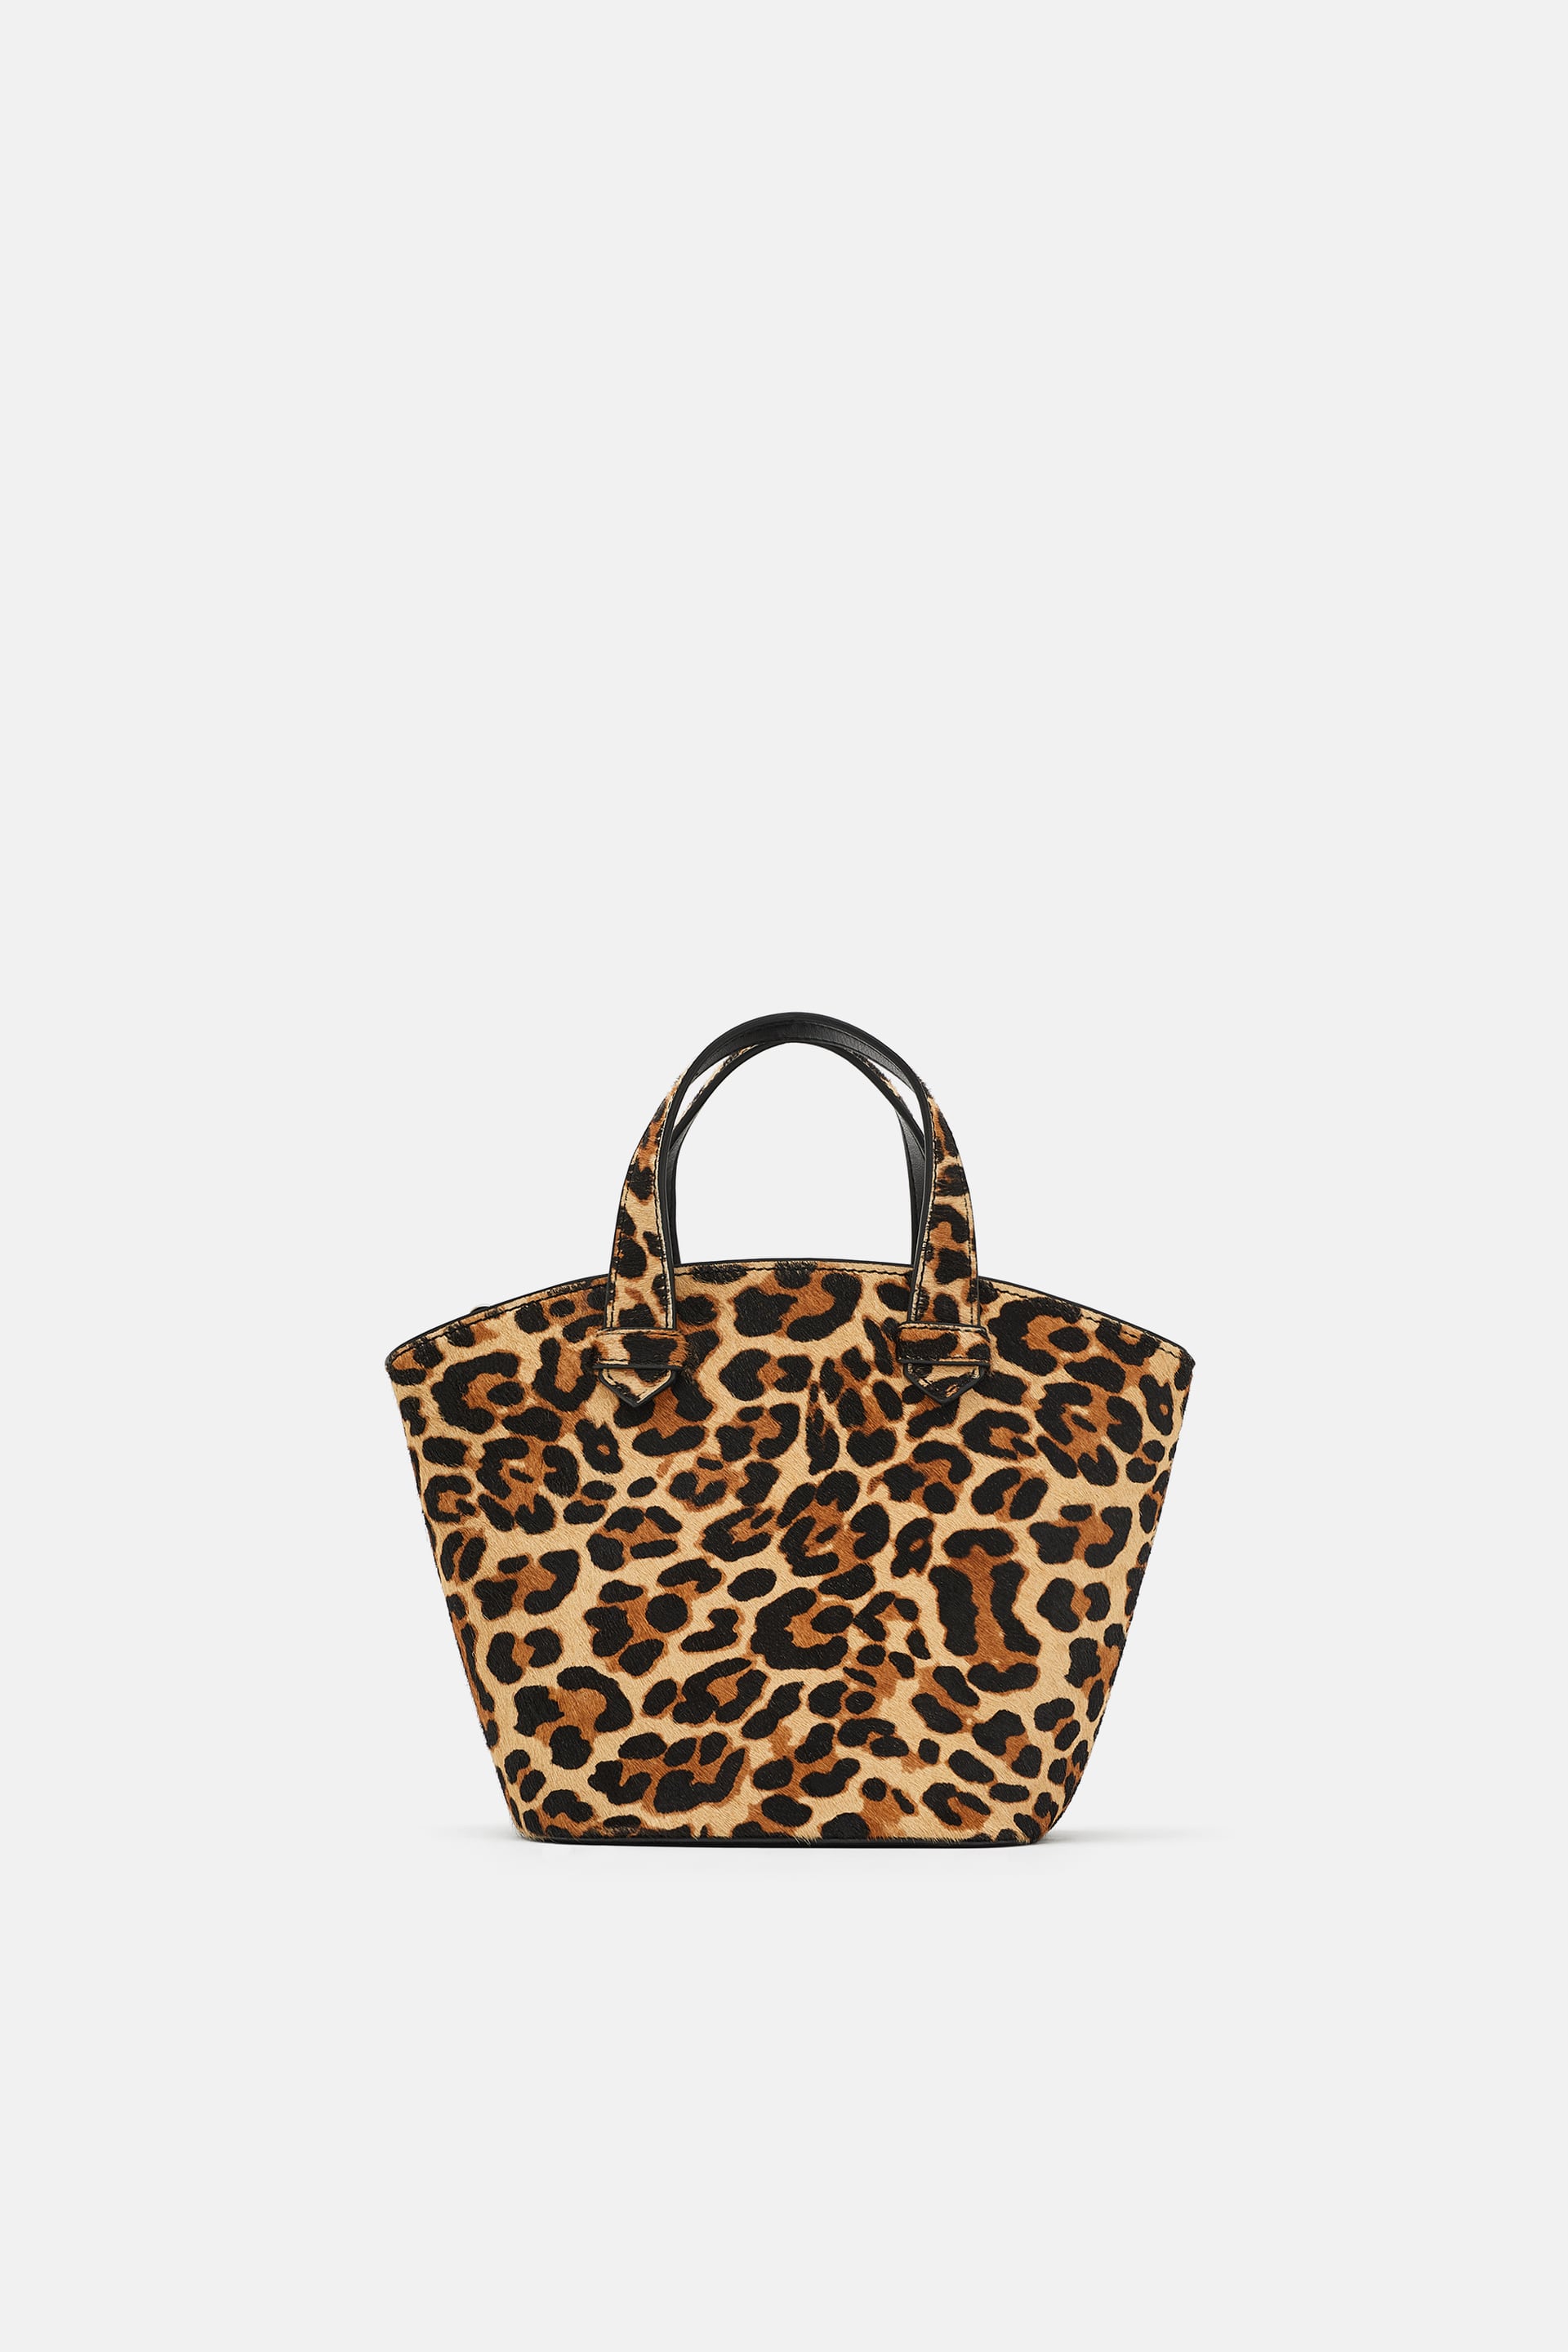 zara leopard print bag